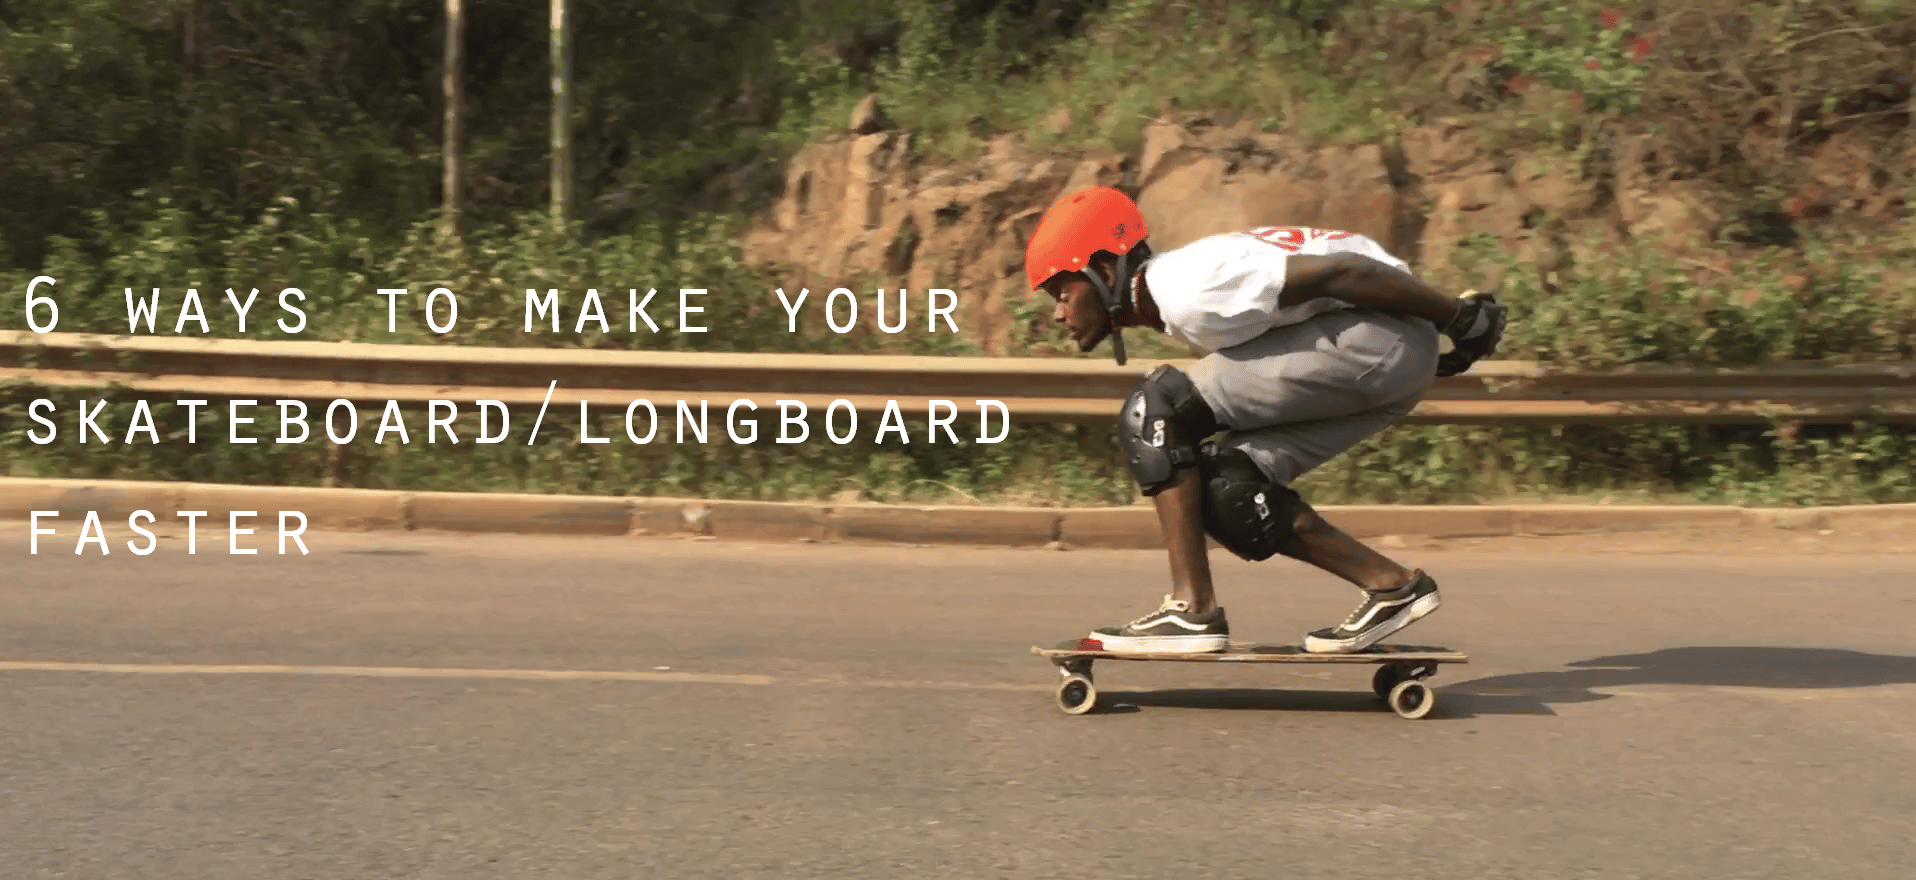 6 ways to make your skateboard/longboard - Downhill254